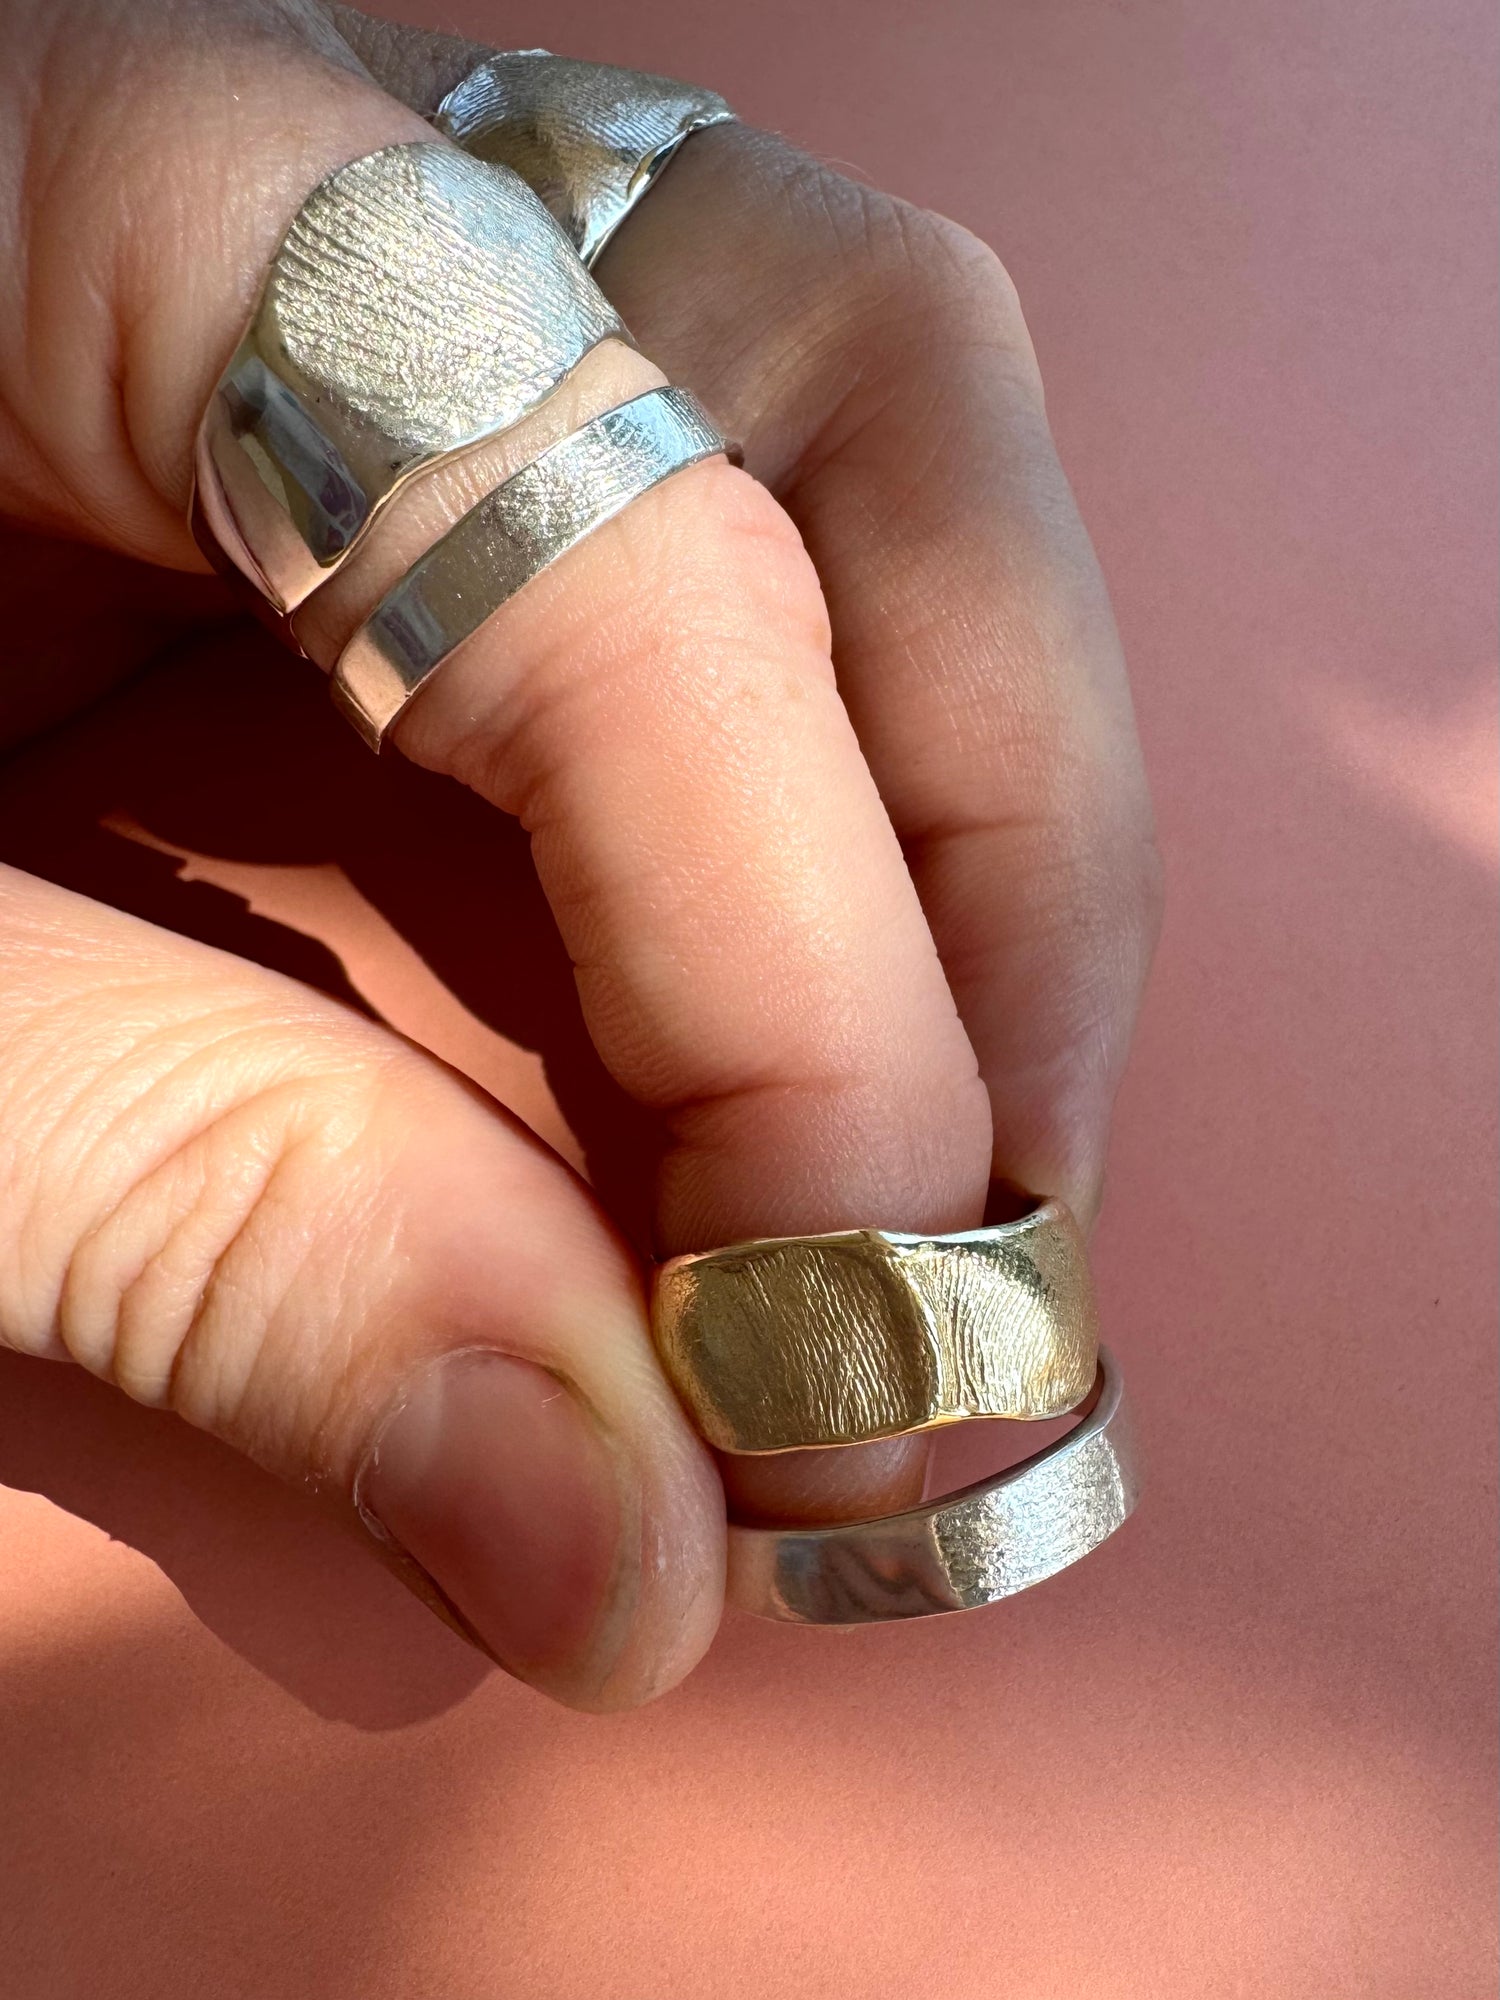 Band Fingerprint Ring - Sterling Silver or 9ct Gold - Print Impression Kit + Ring